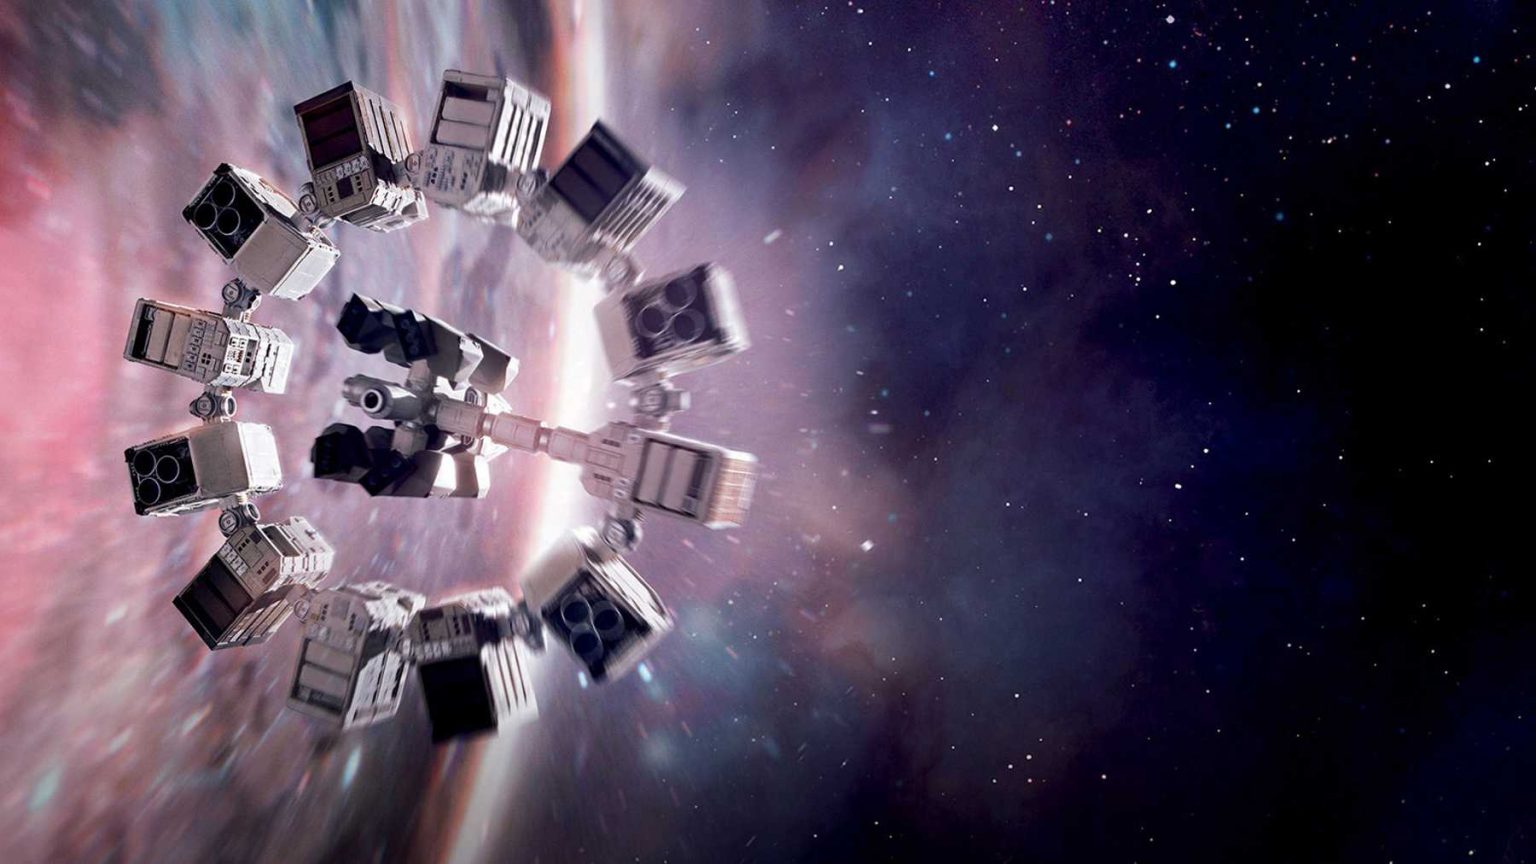 interstellar full movie download 1080p filmywap